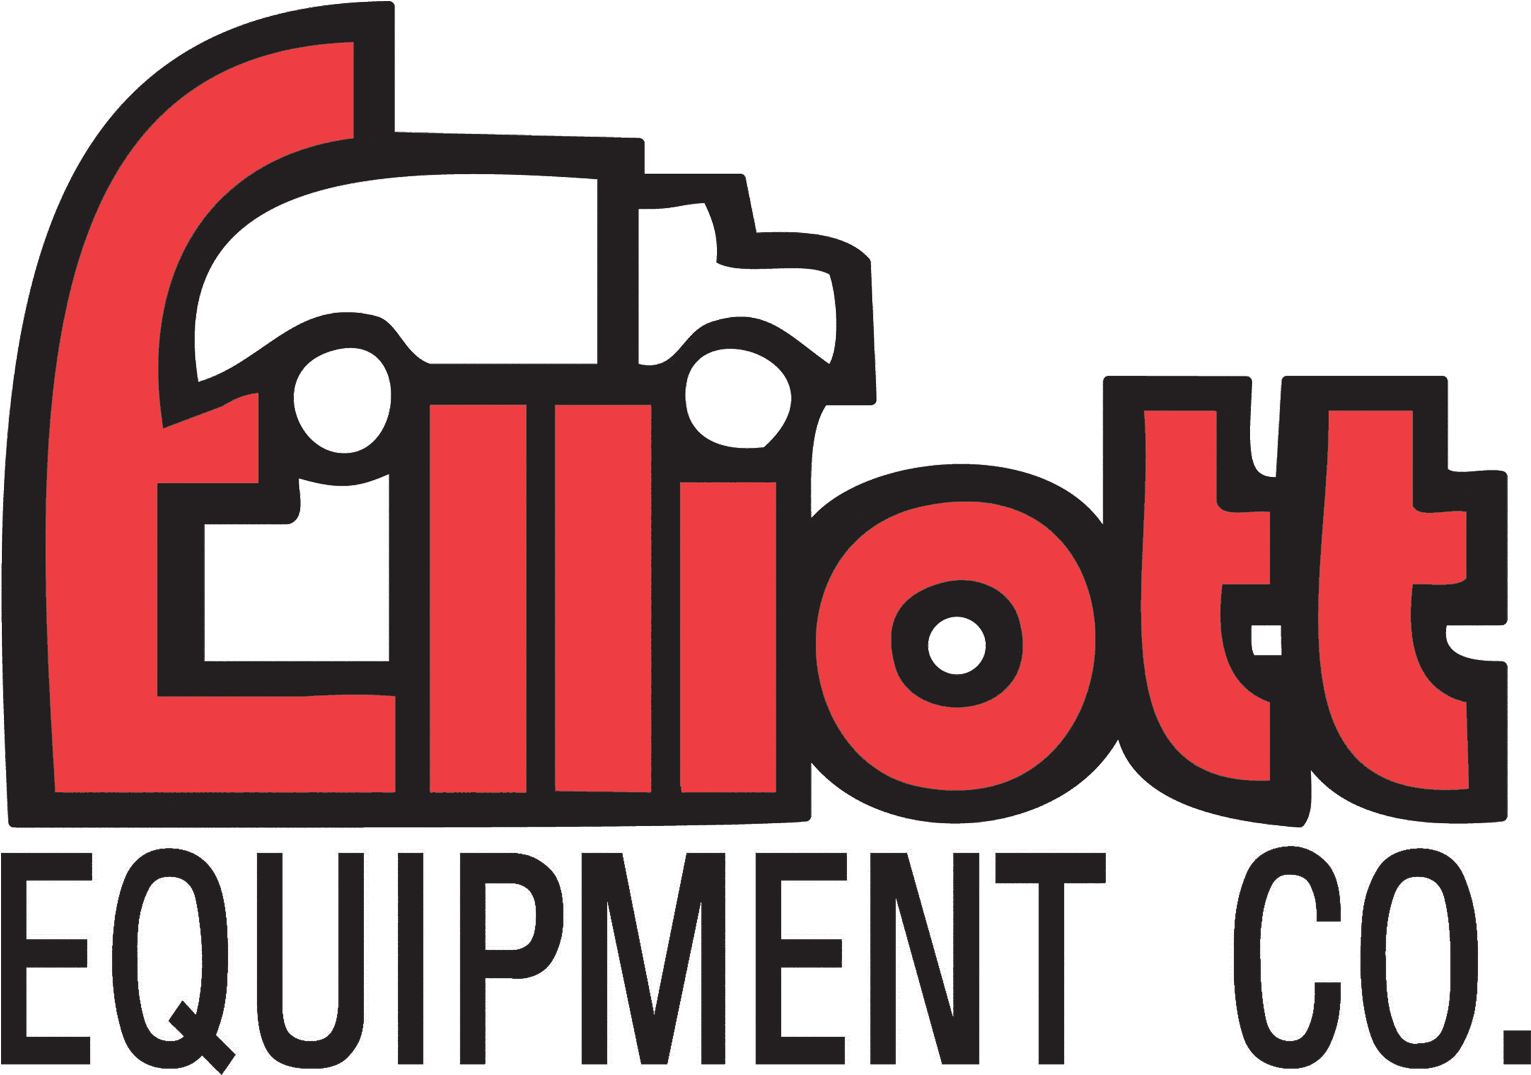 Build Your Career By Applying For A Job At Elliott - Elliott Equipment (1920x1080)